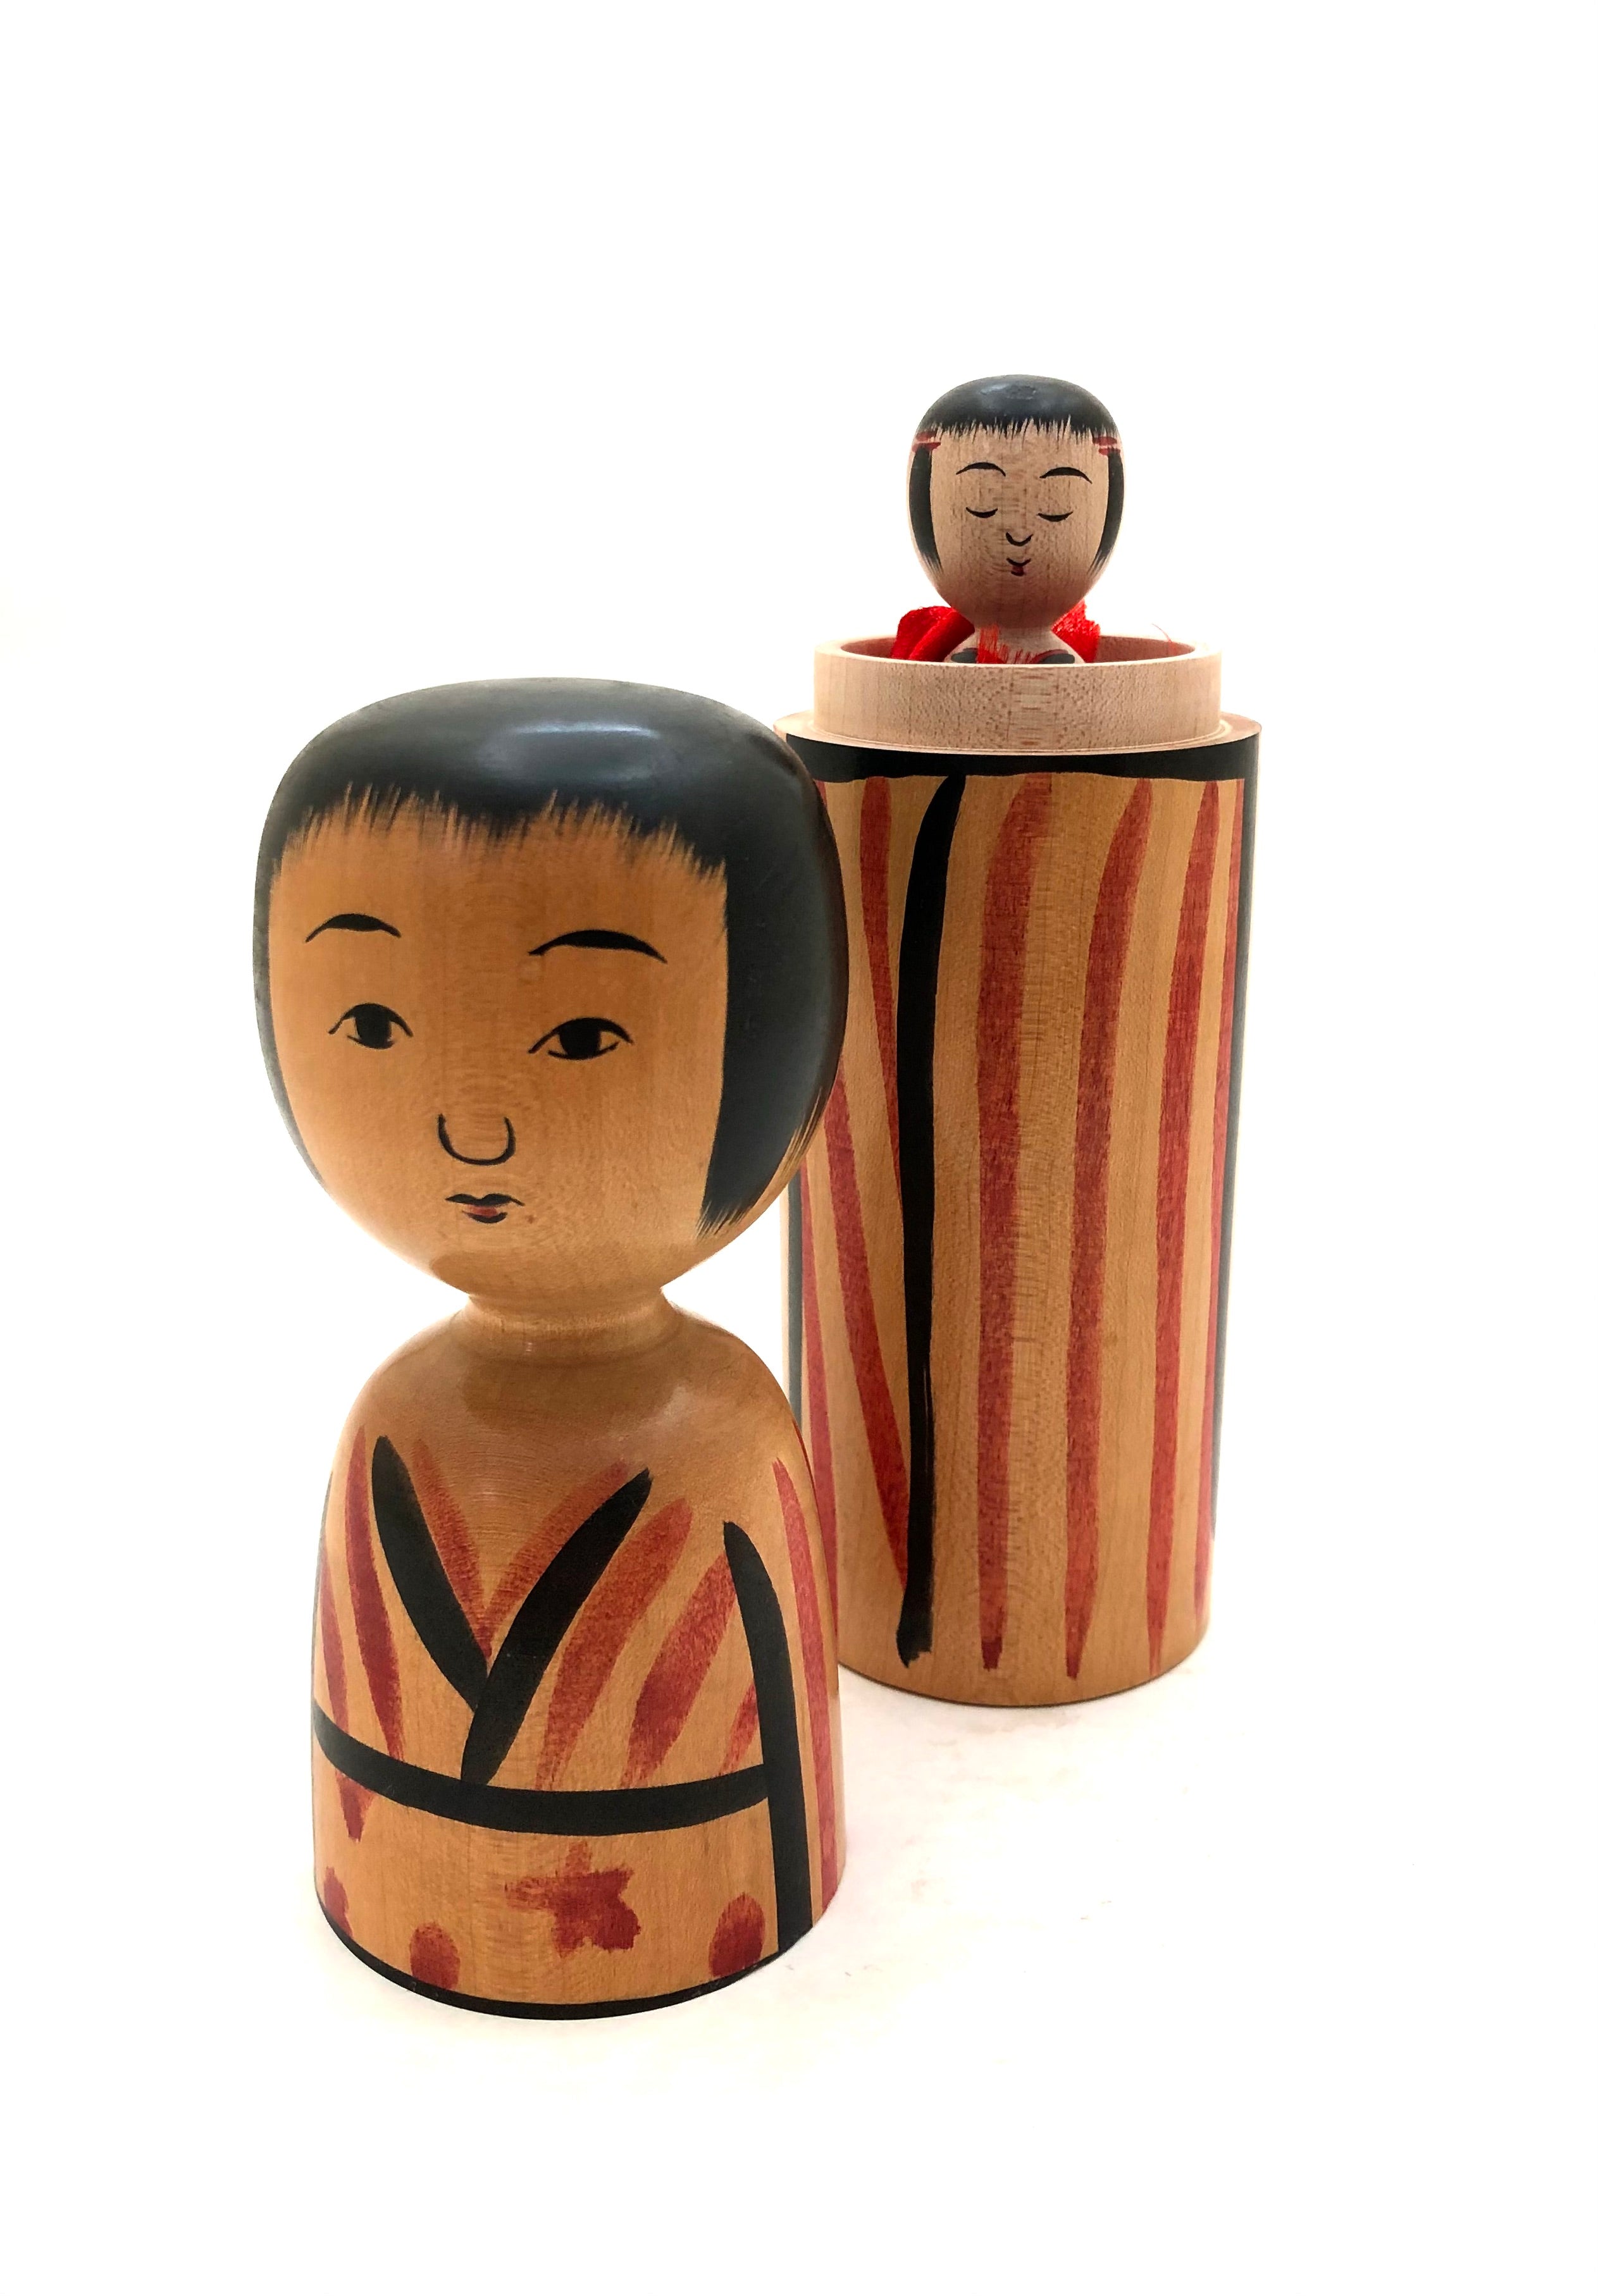 Unusual Japanese Kijiyama Kokeshi Container with Child by Takahashi, Yuji